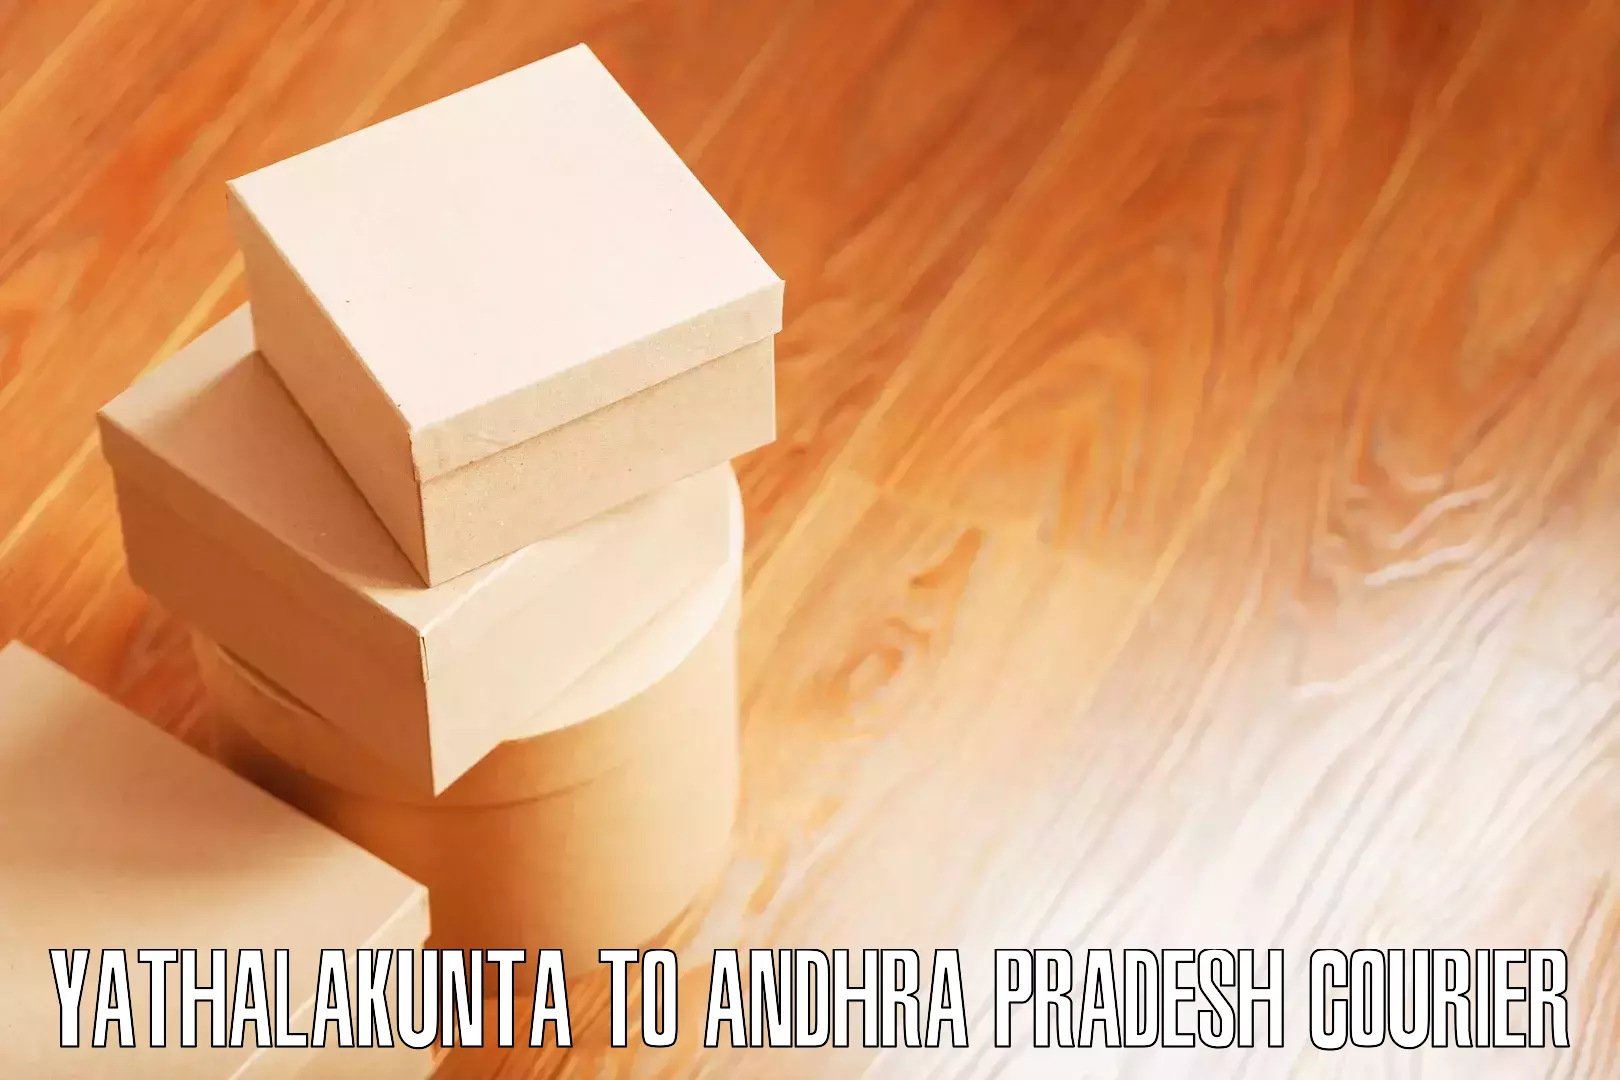 Professional movers and packers Yathalakunta to Pulivendula